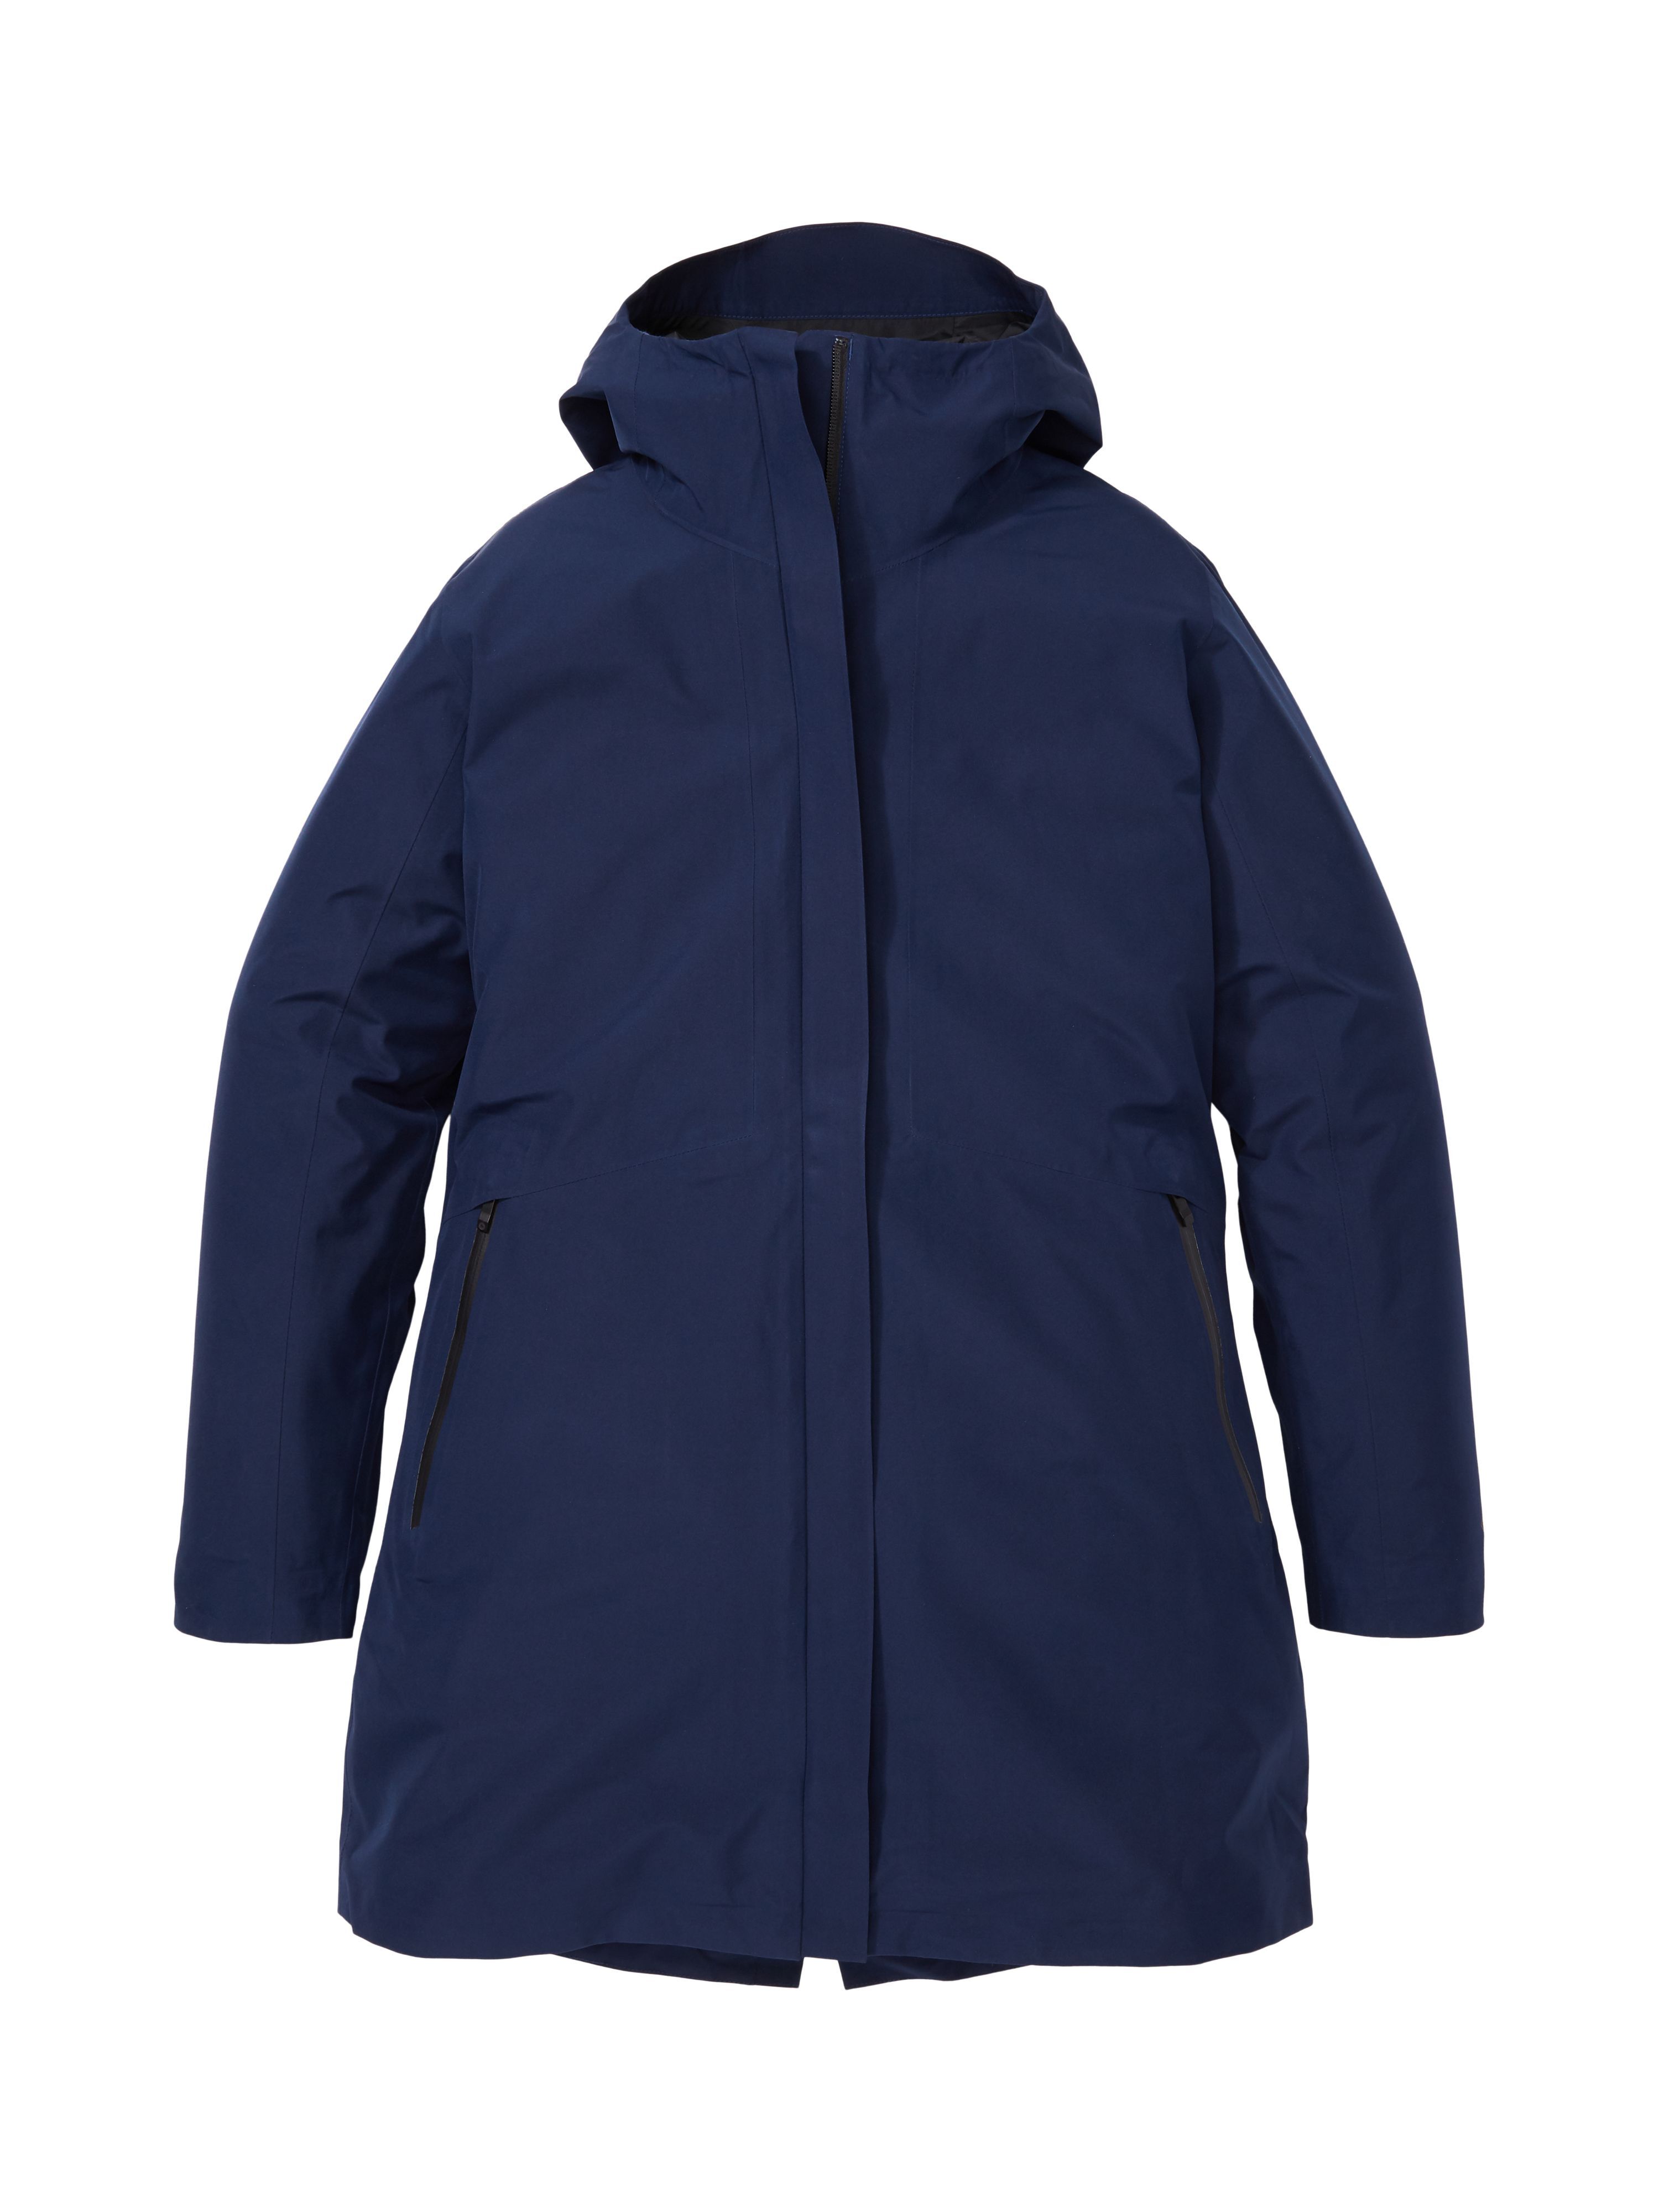 Marmot Bleeker Component Jacket - 3-in-1 jacket - Women's